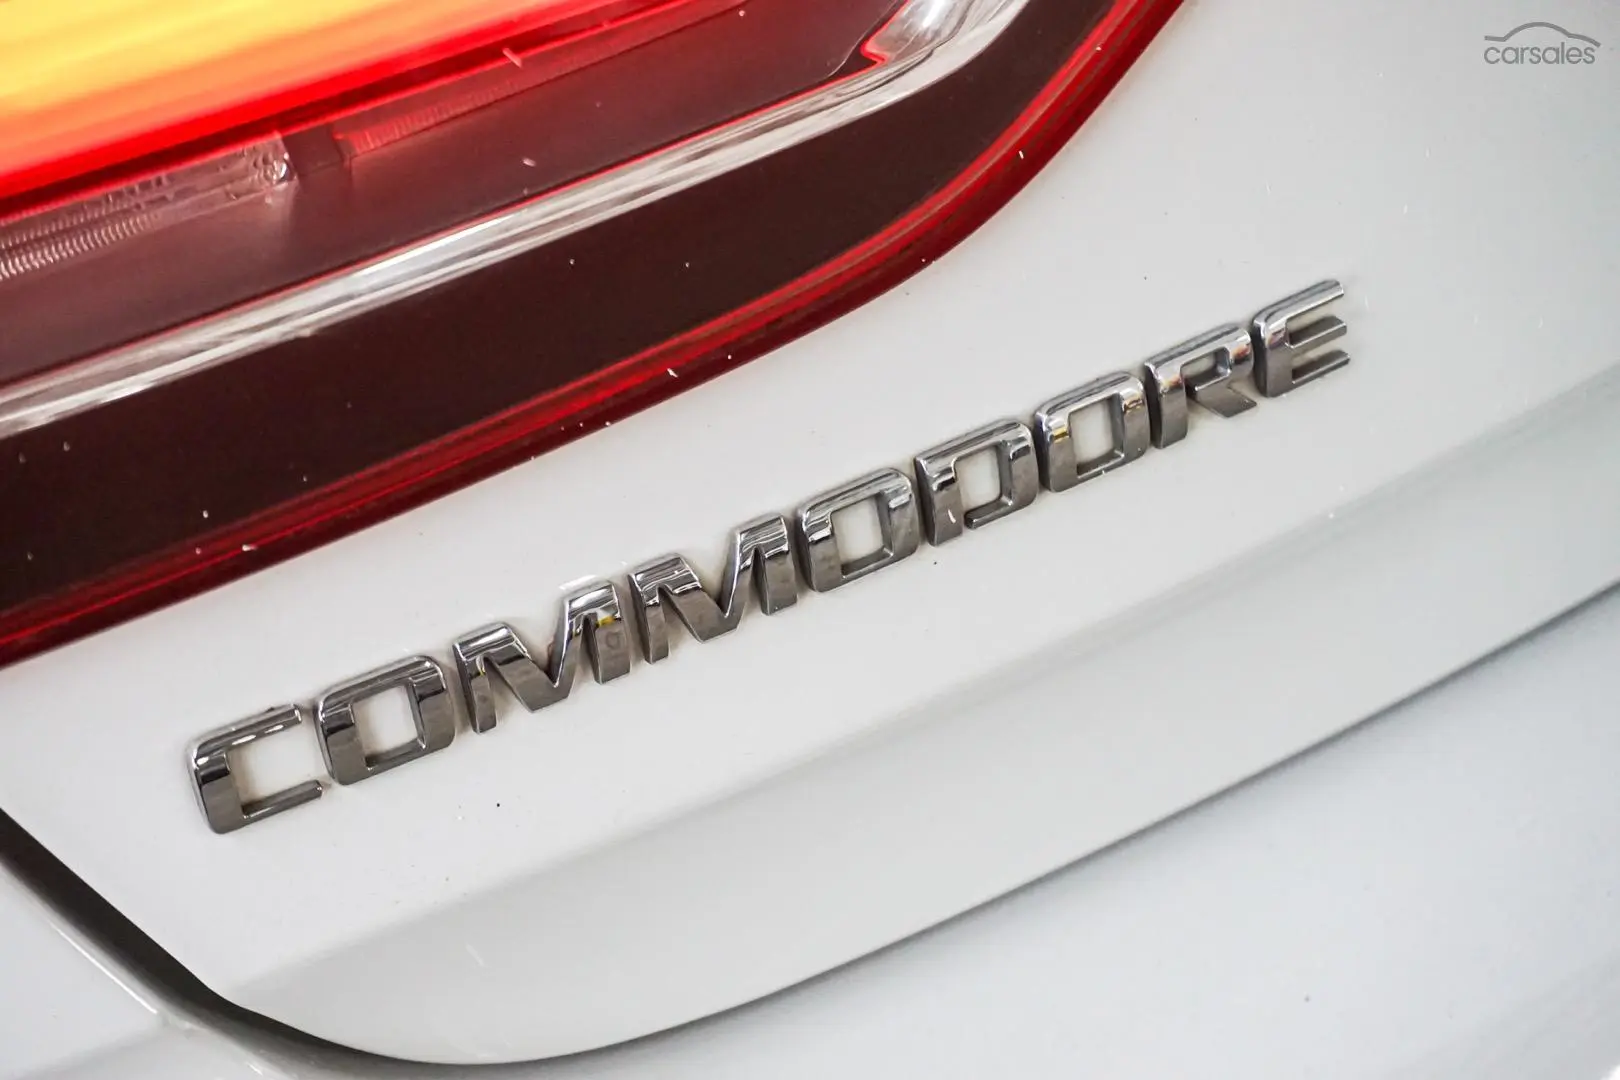 2018 Holden Commodore Image 13